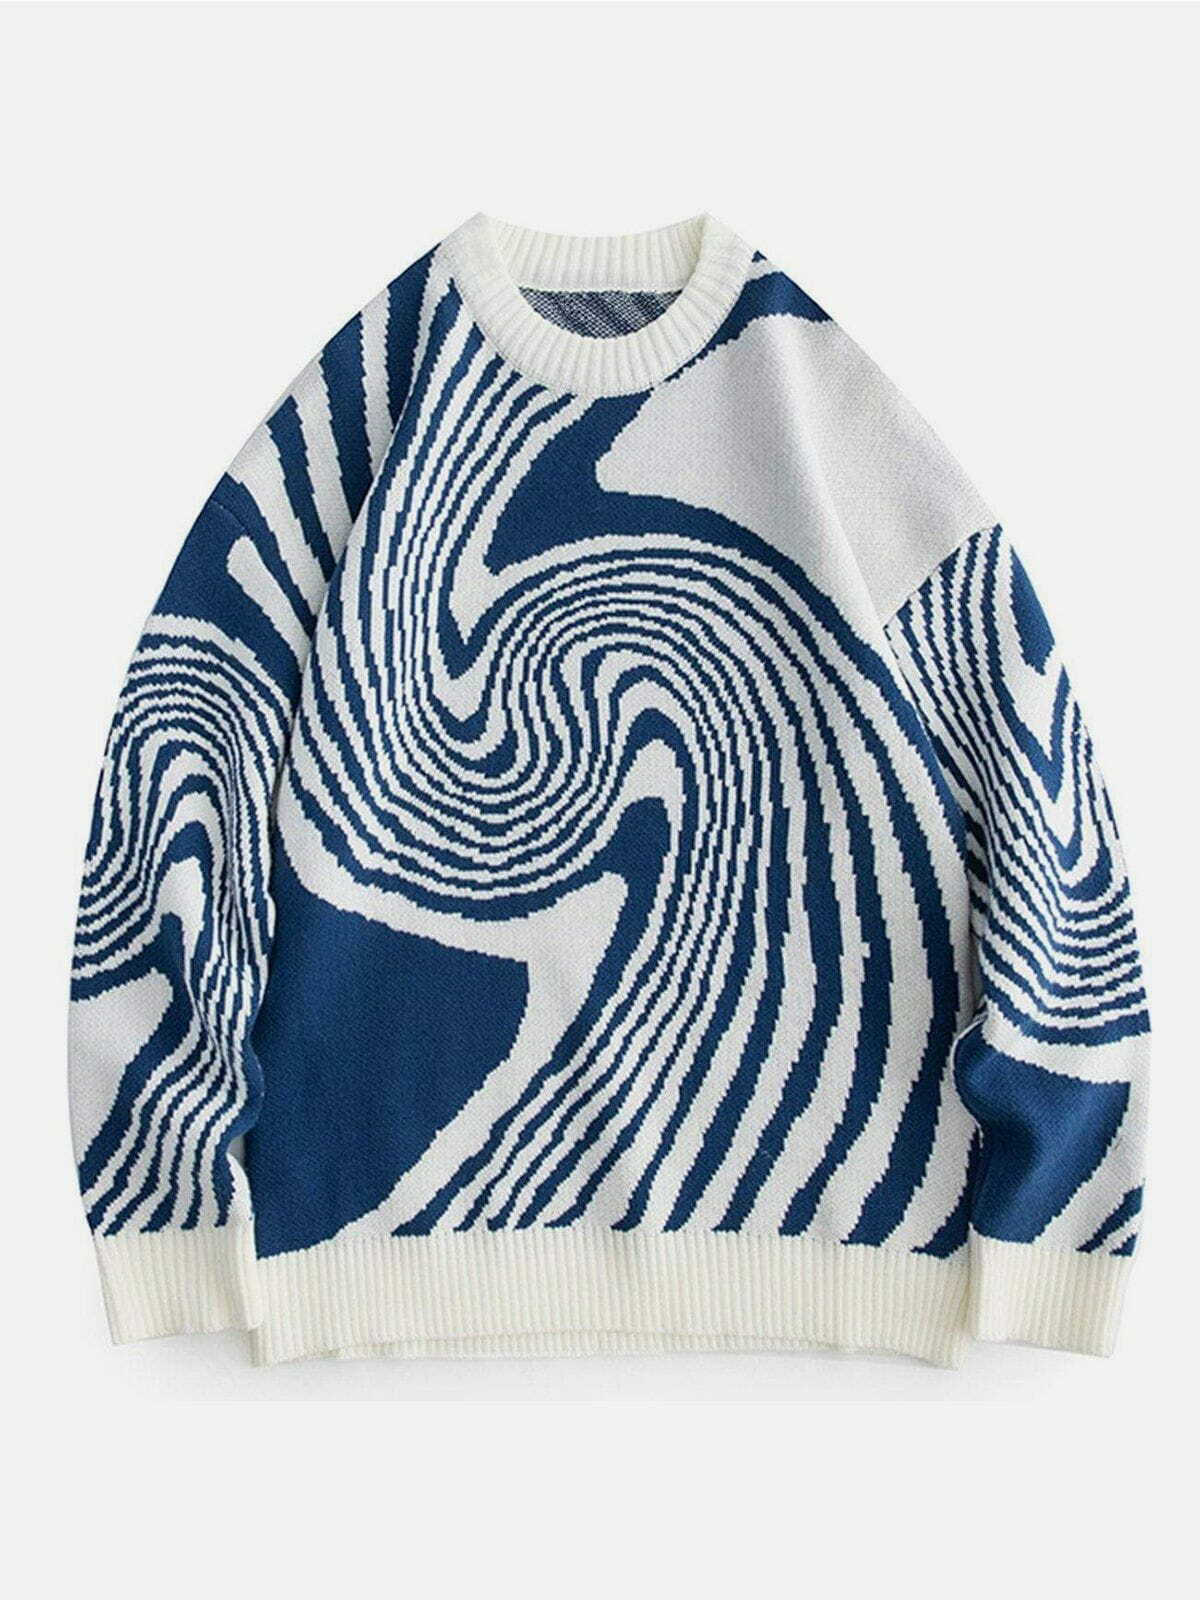 whirlpool knit sweater edgy y2k streetwear essential 1730